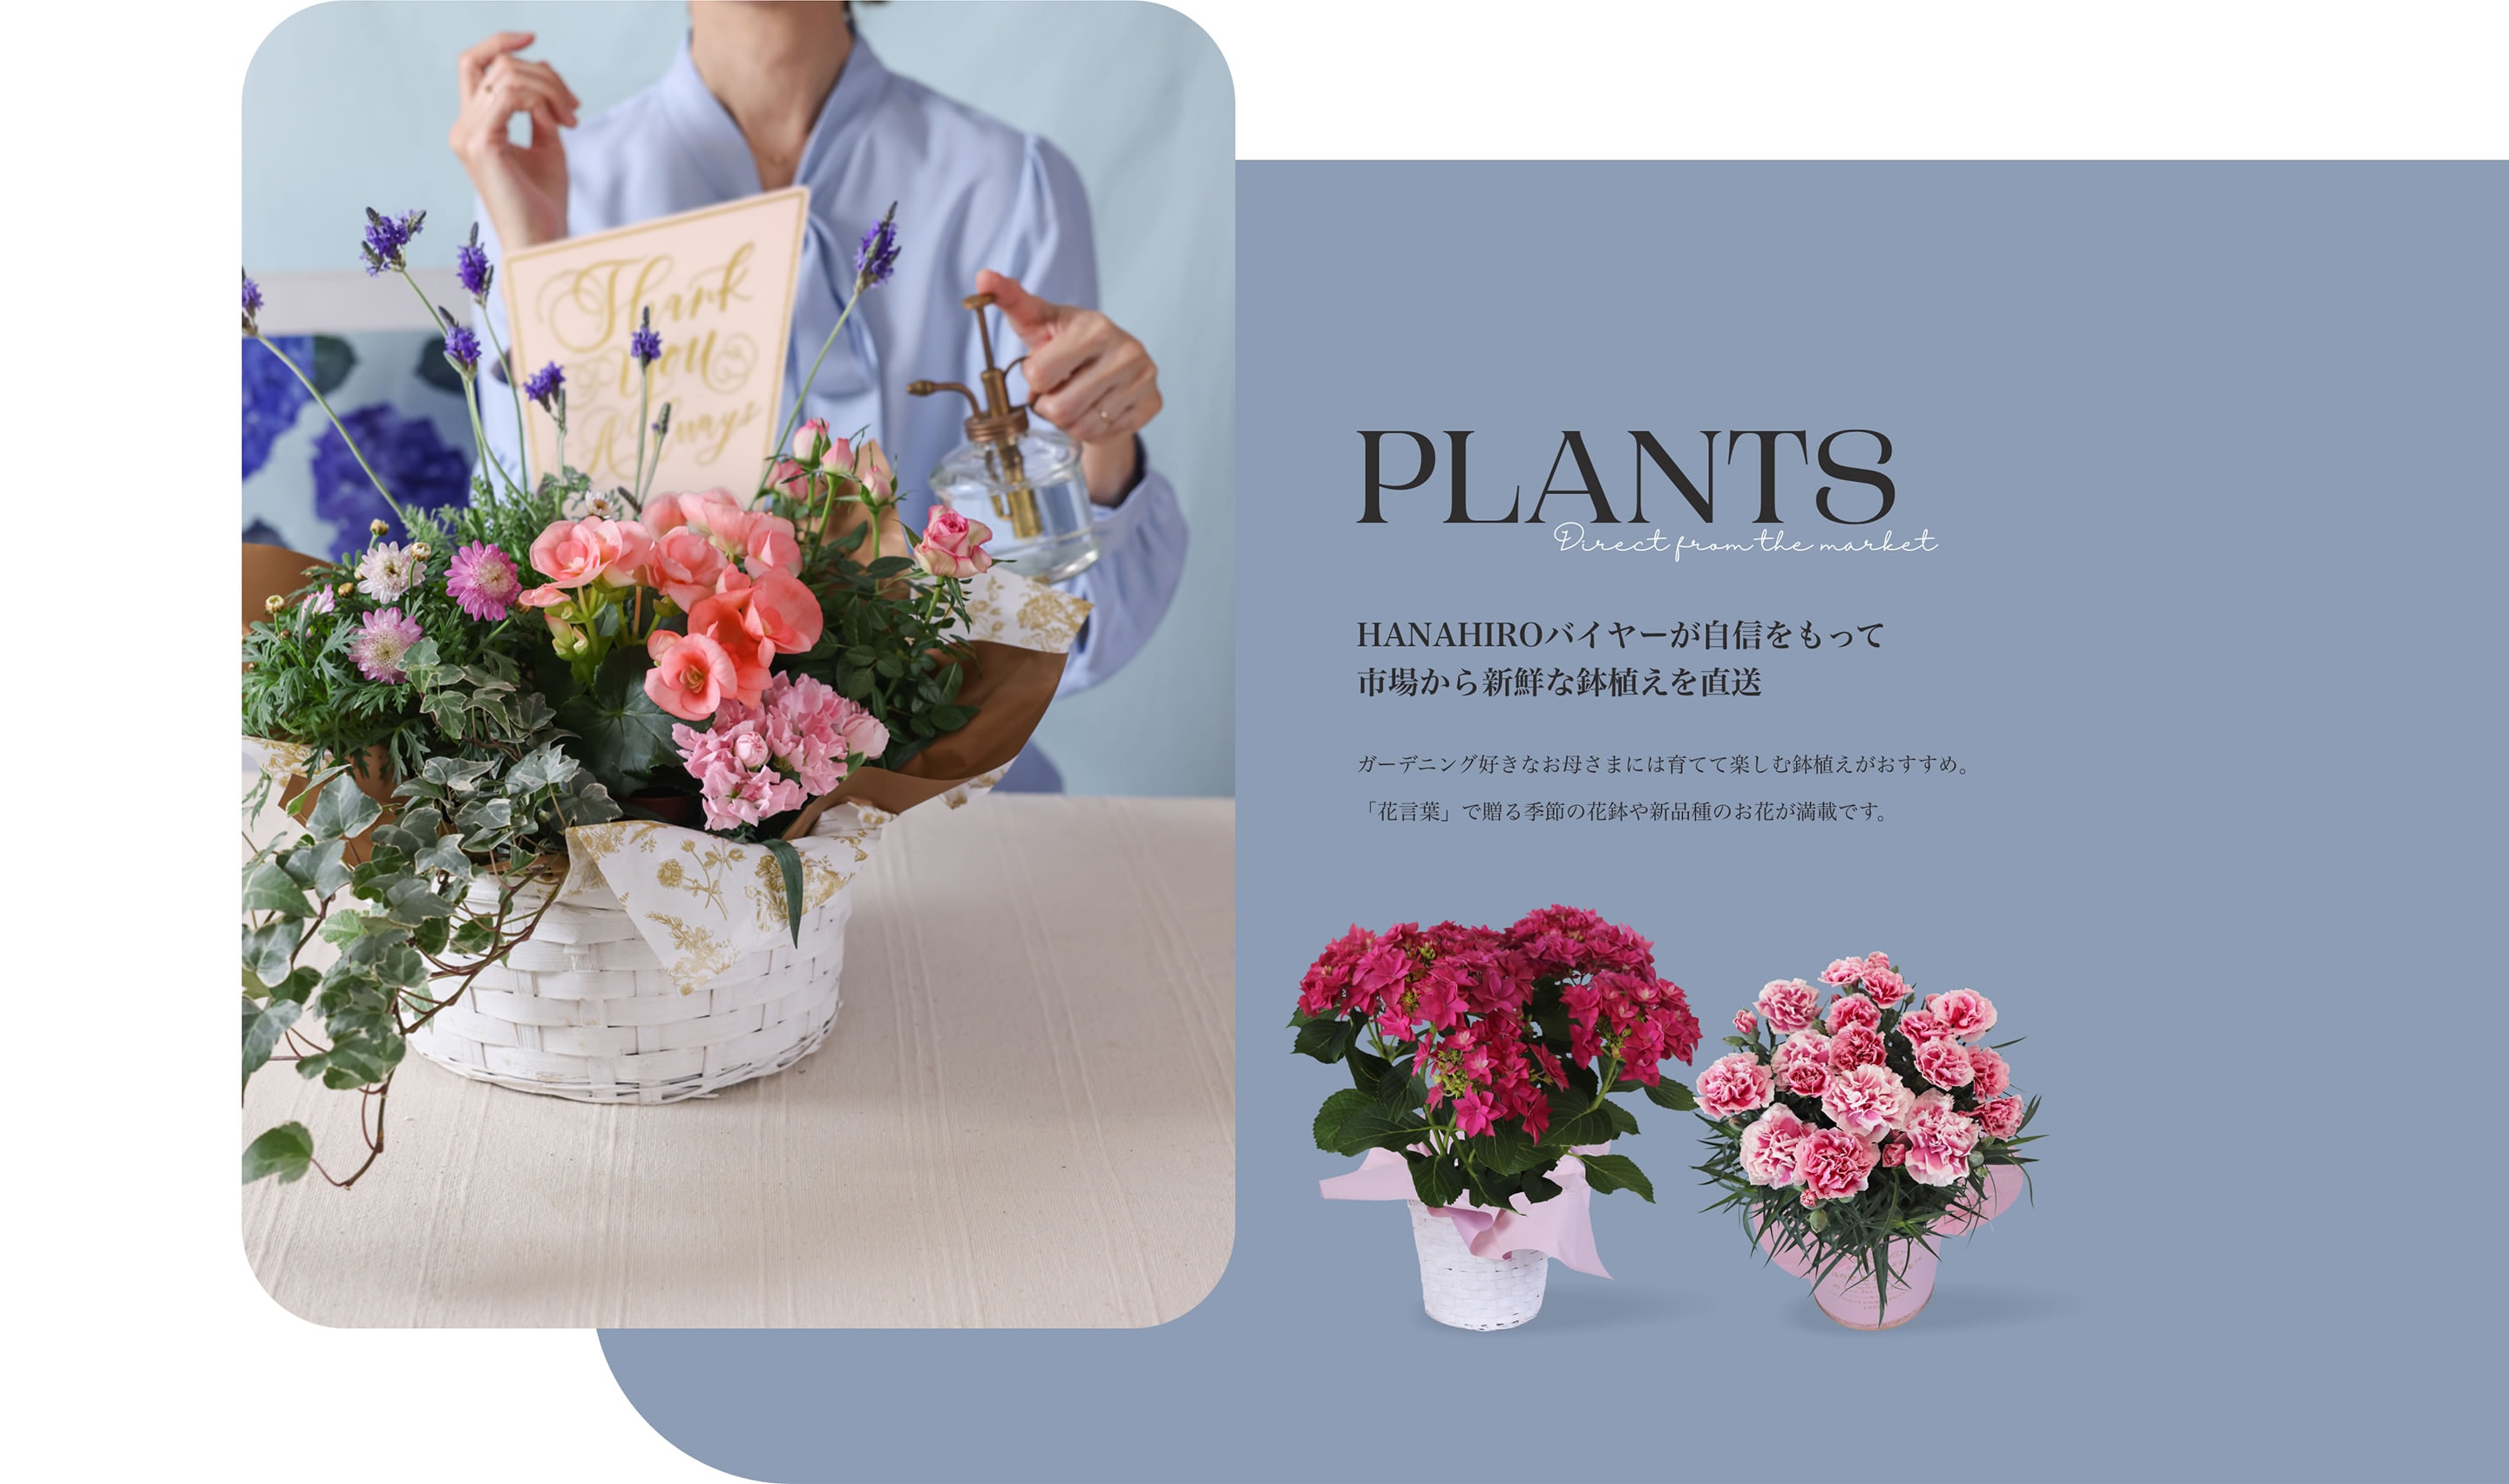 PLANTS HANAHIROバイヤーが自信をもって市場から新鮮な鉢植えを直送 ガーデニング好きなお母さまには育てて楽しむ鉢植えがおすすめ。「花言葉」で贈る季節の花鉢や新品種のお花が満載です。